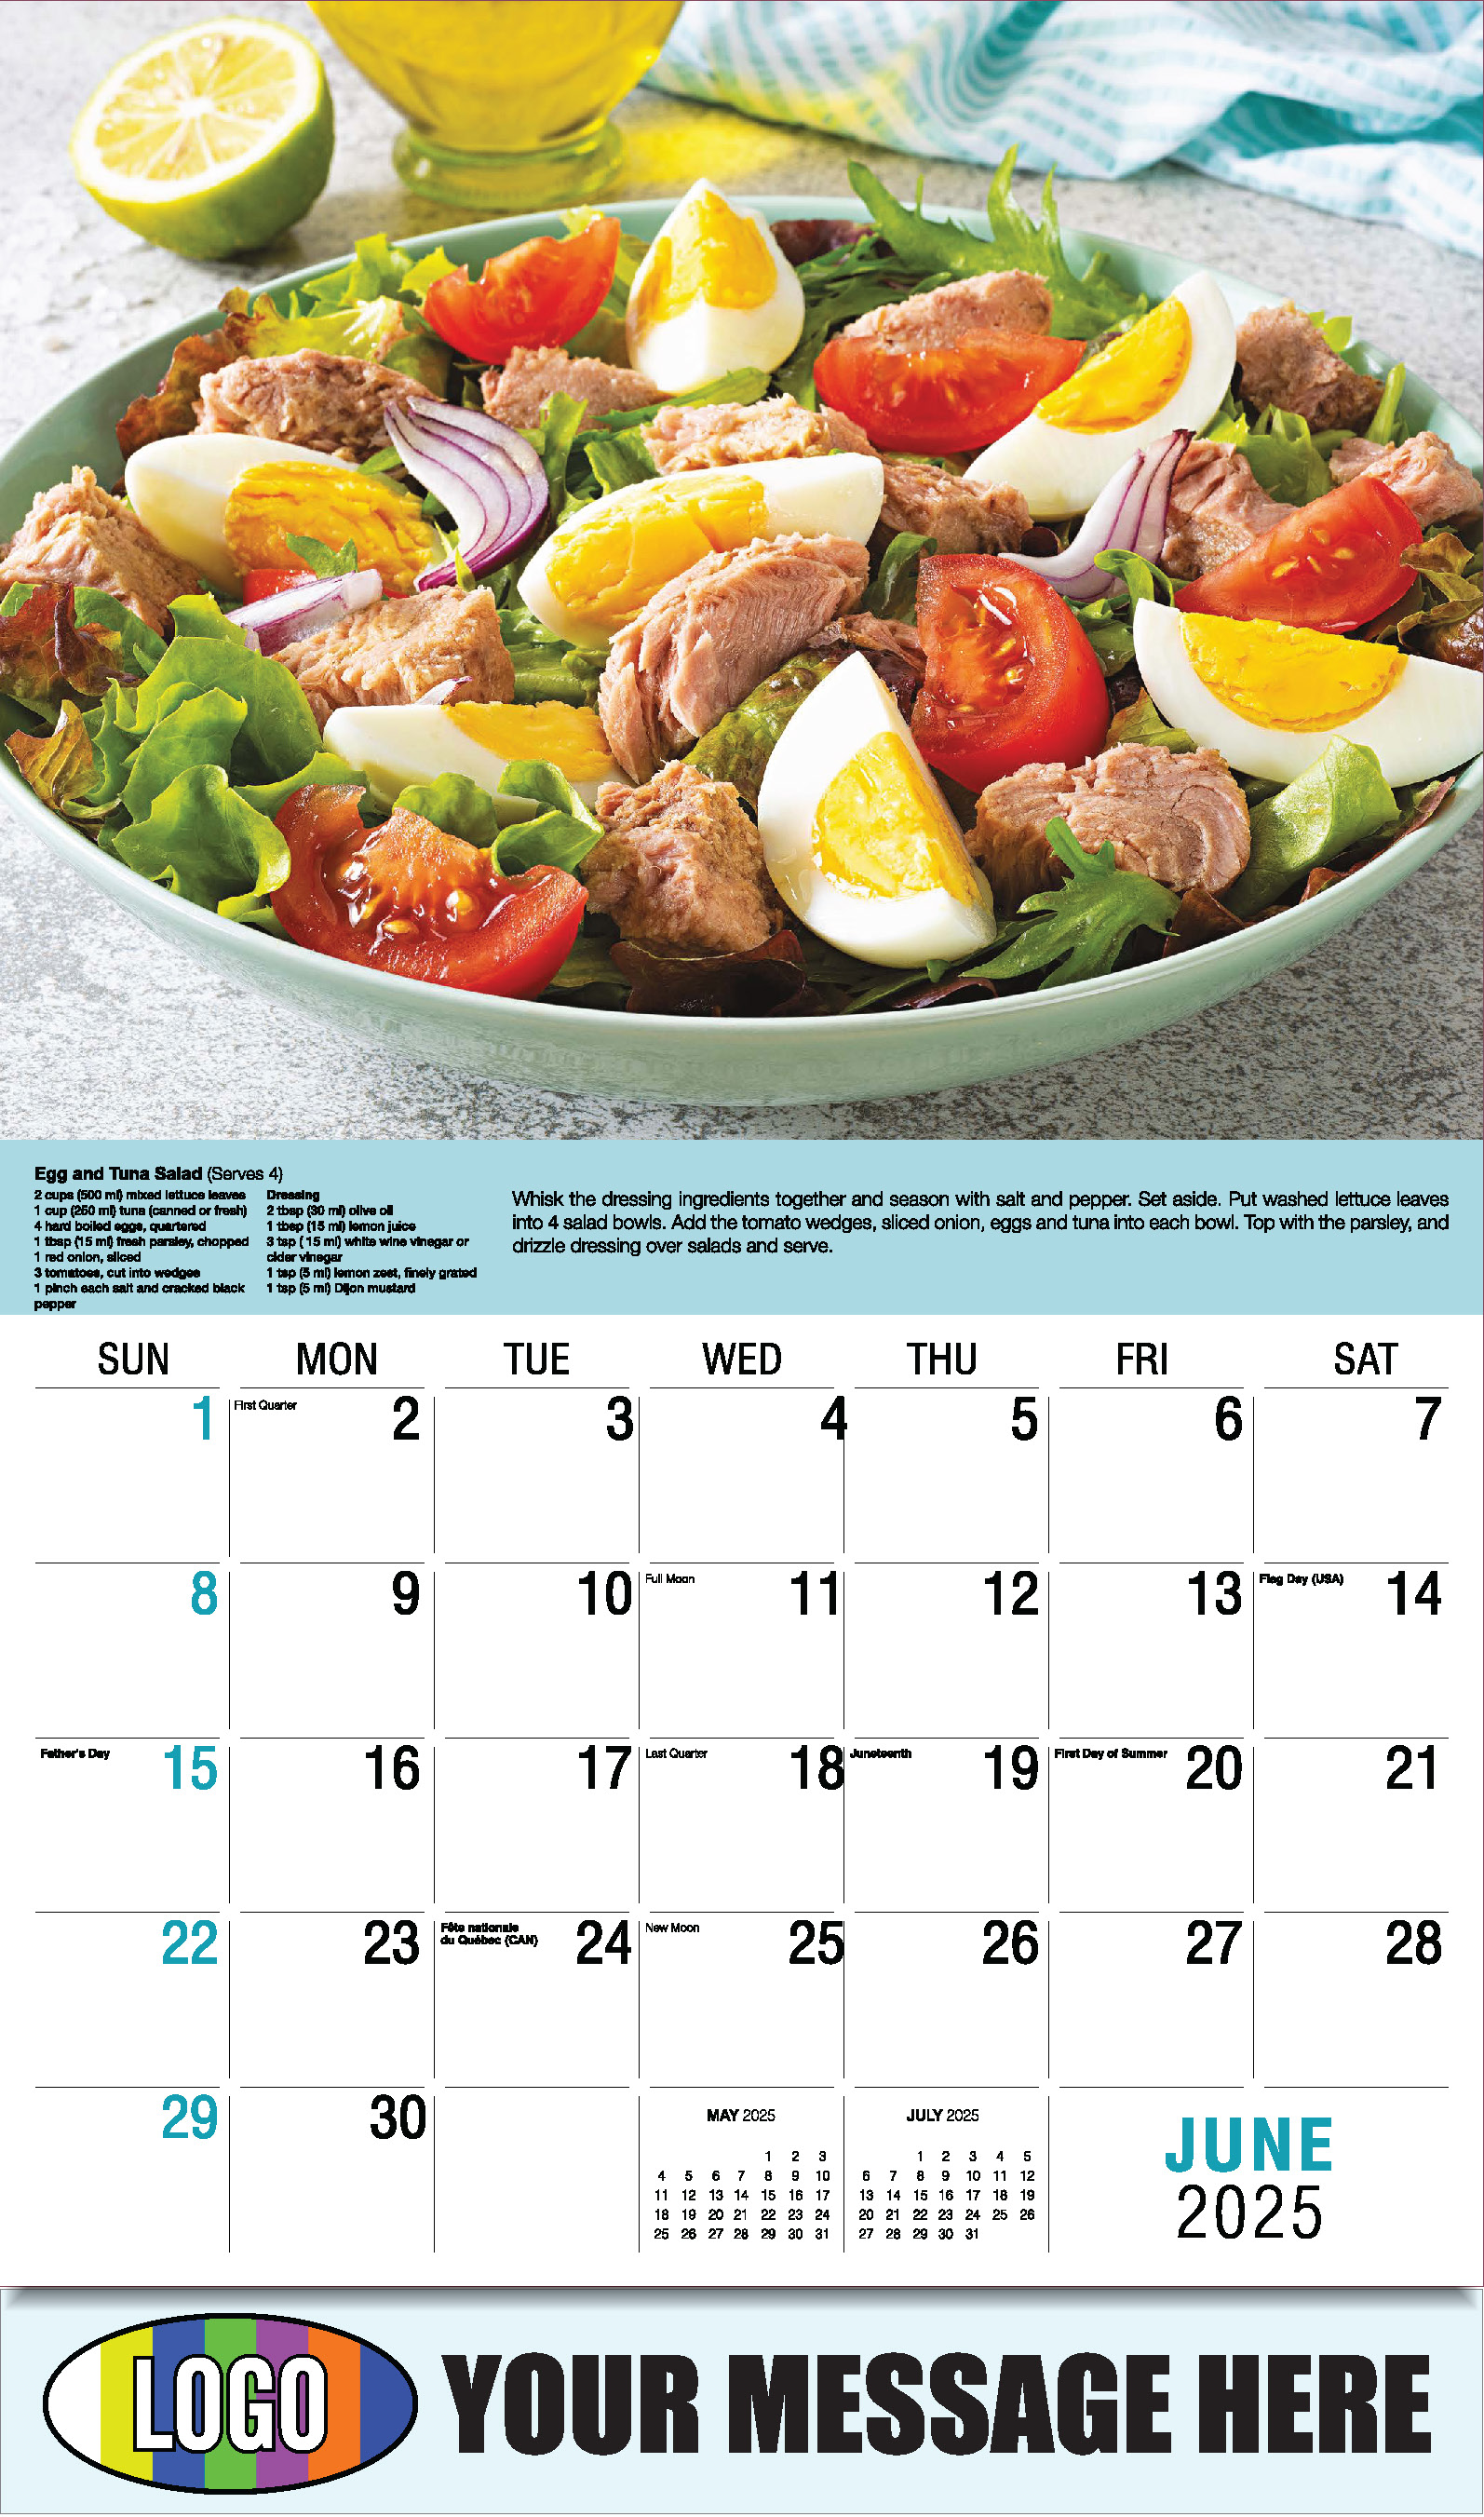 Recipes 2025 Business Promotional Calendar - June